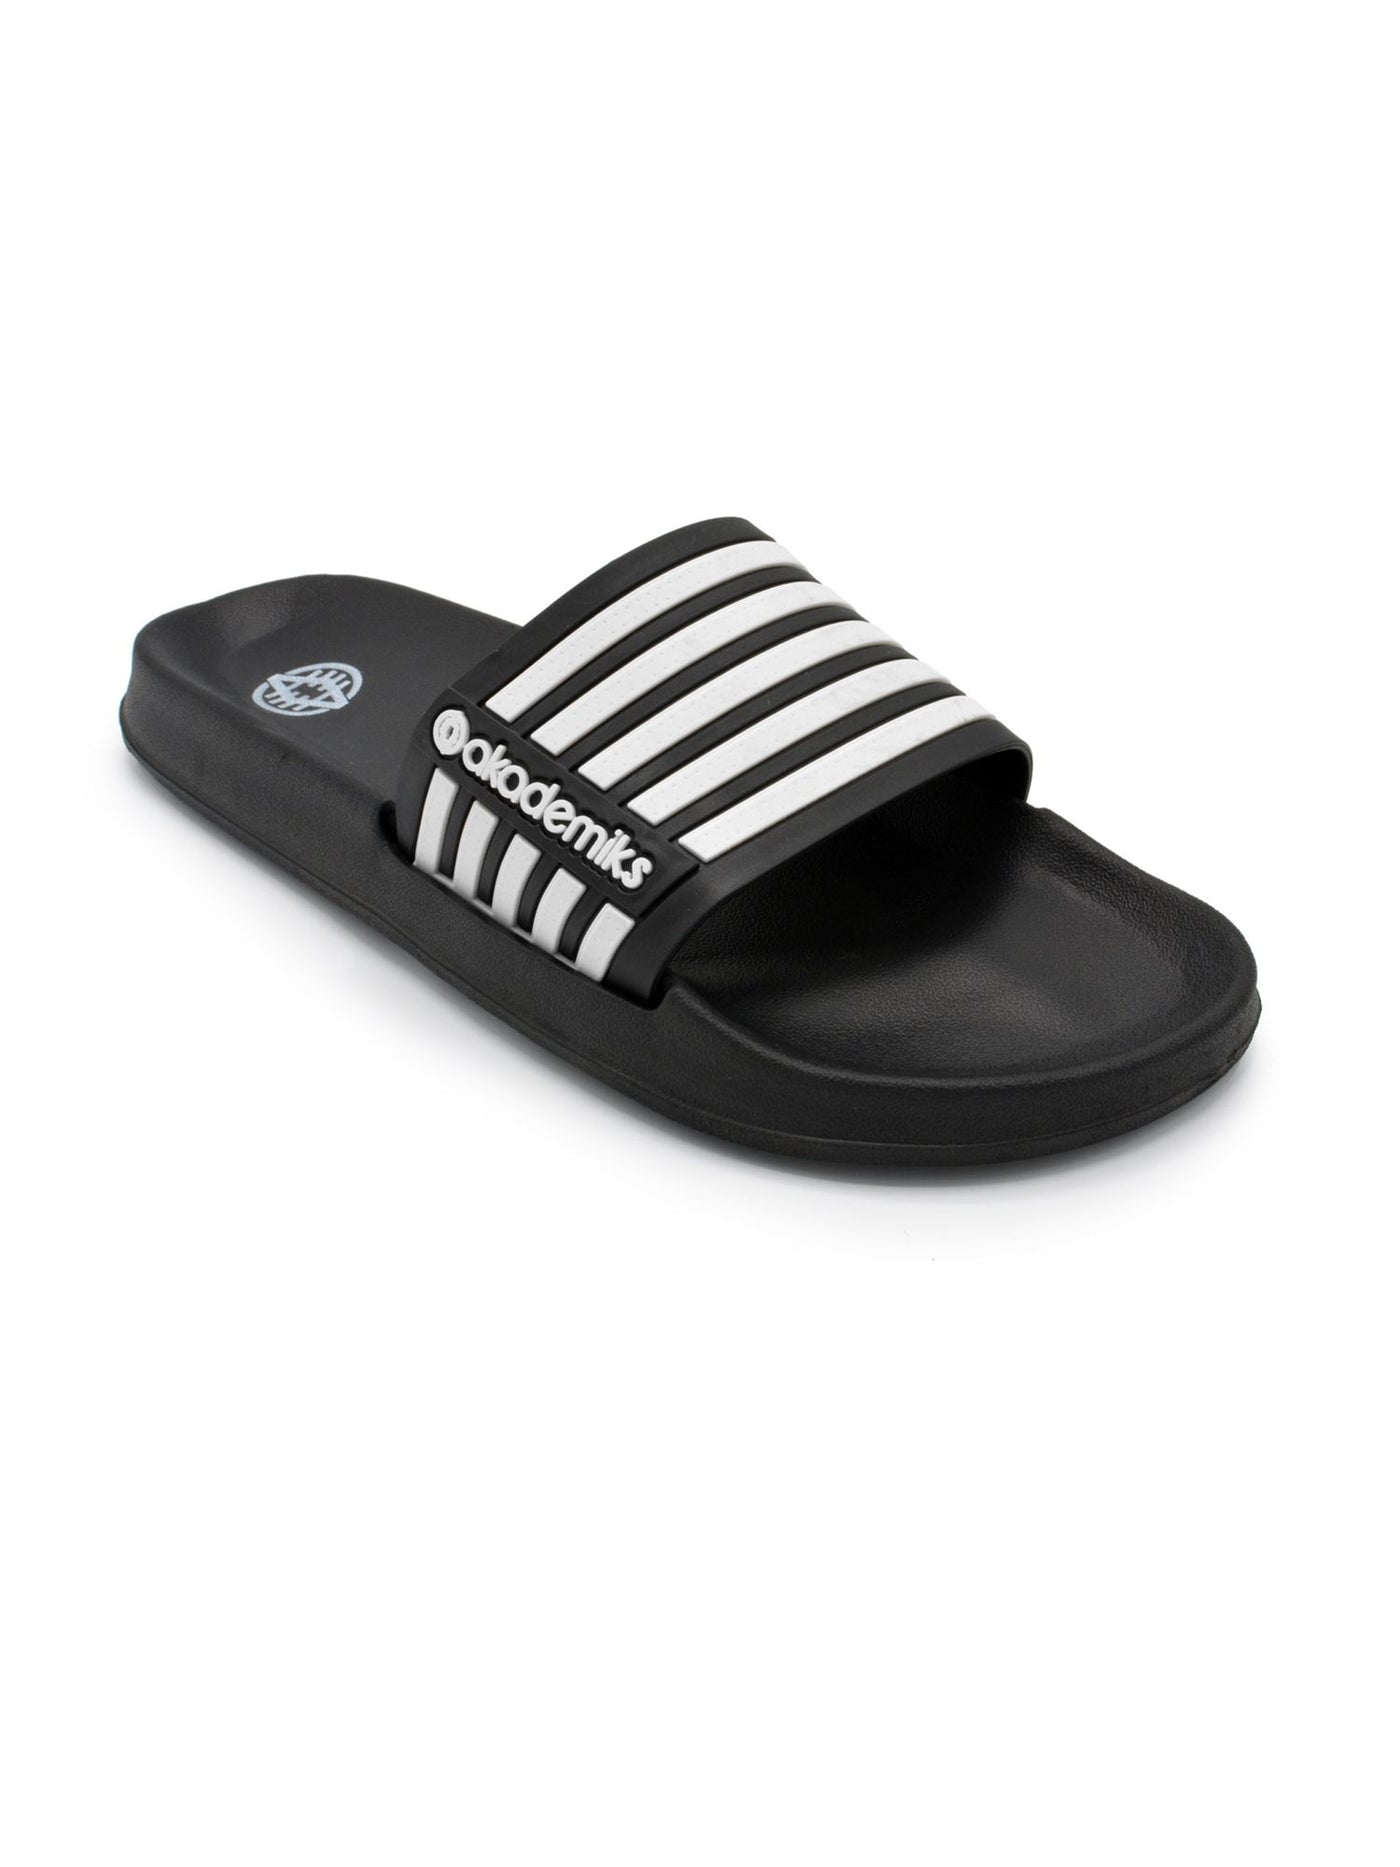 AKADEMIKS Mens Black Striped Comfort Akademiks Round Toe Slip On Slide Sandals Shoes 45